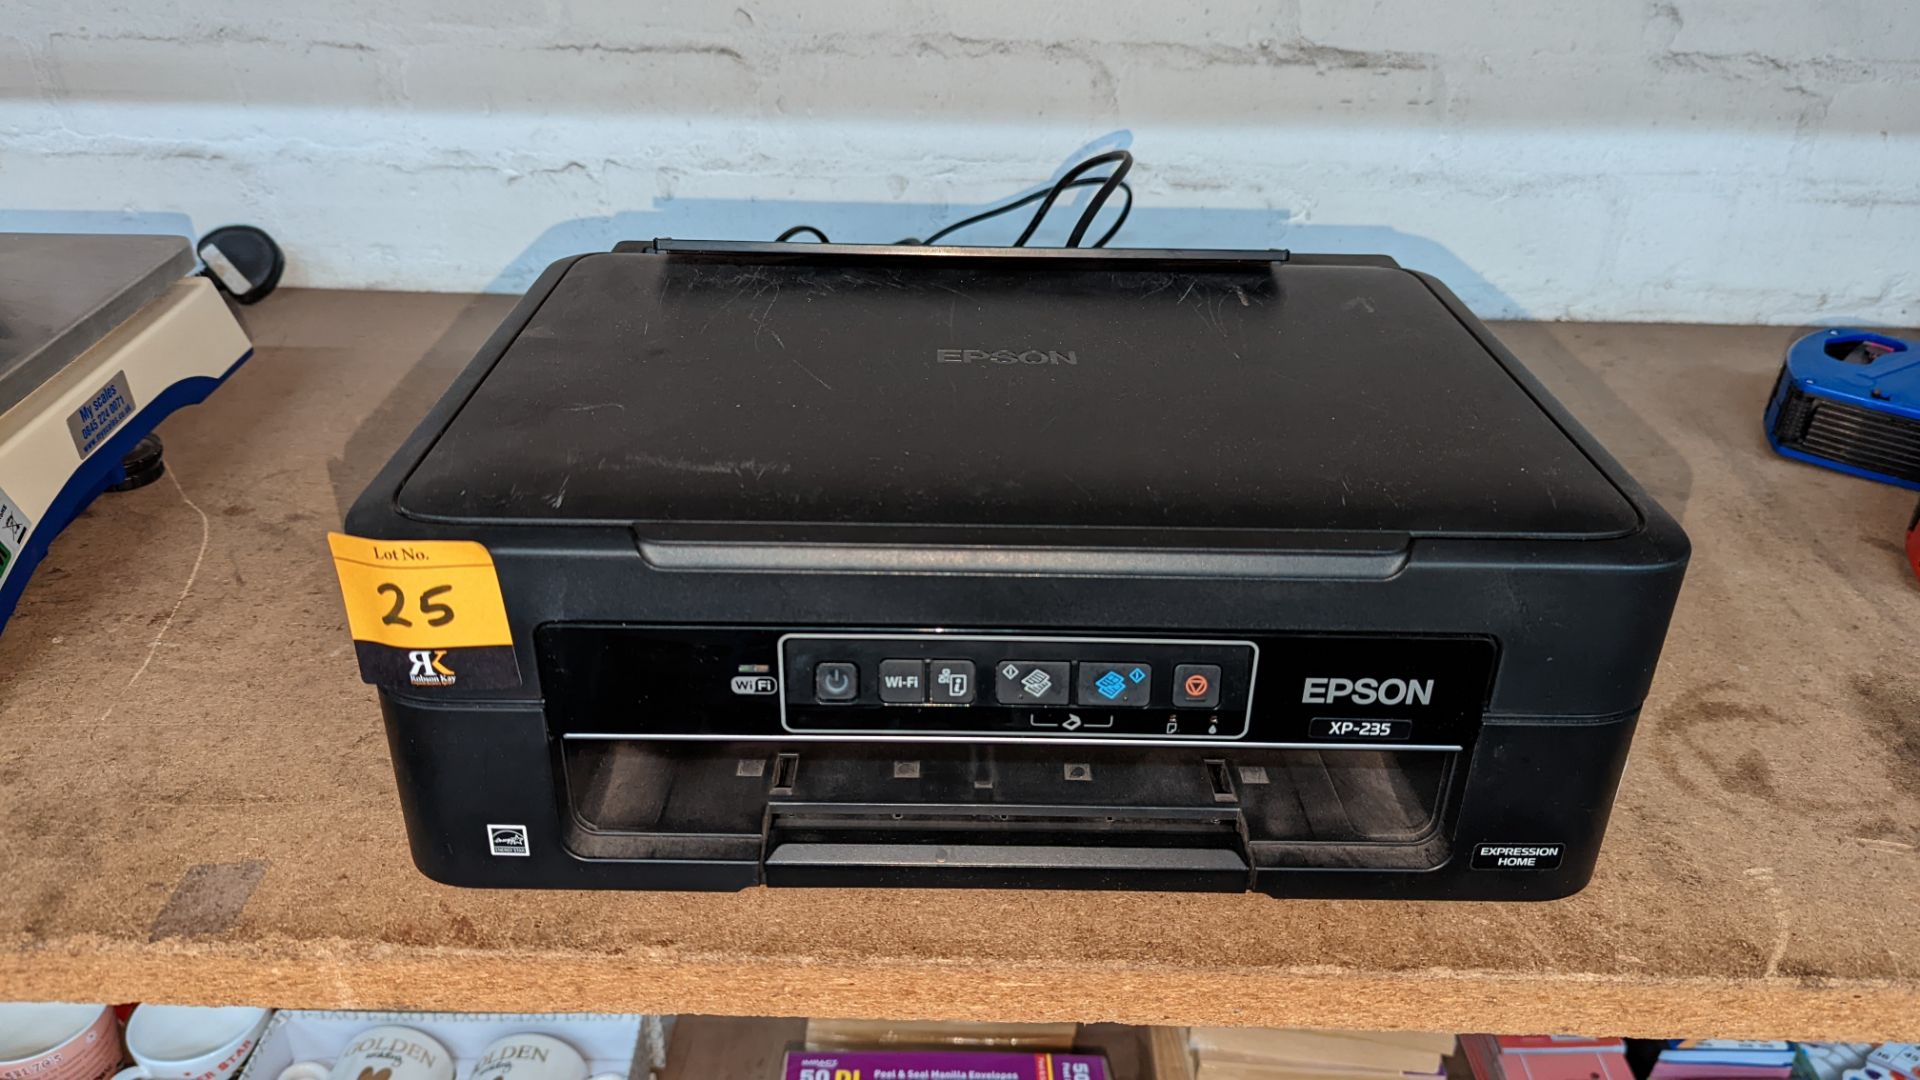 Epson XP-235 printer - Image 2 of 4